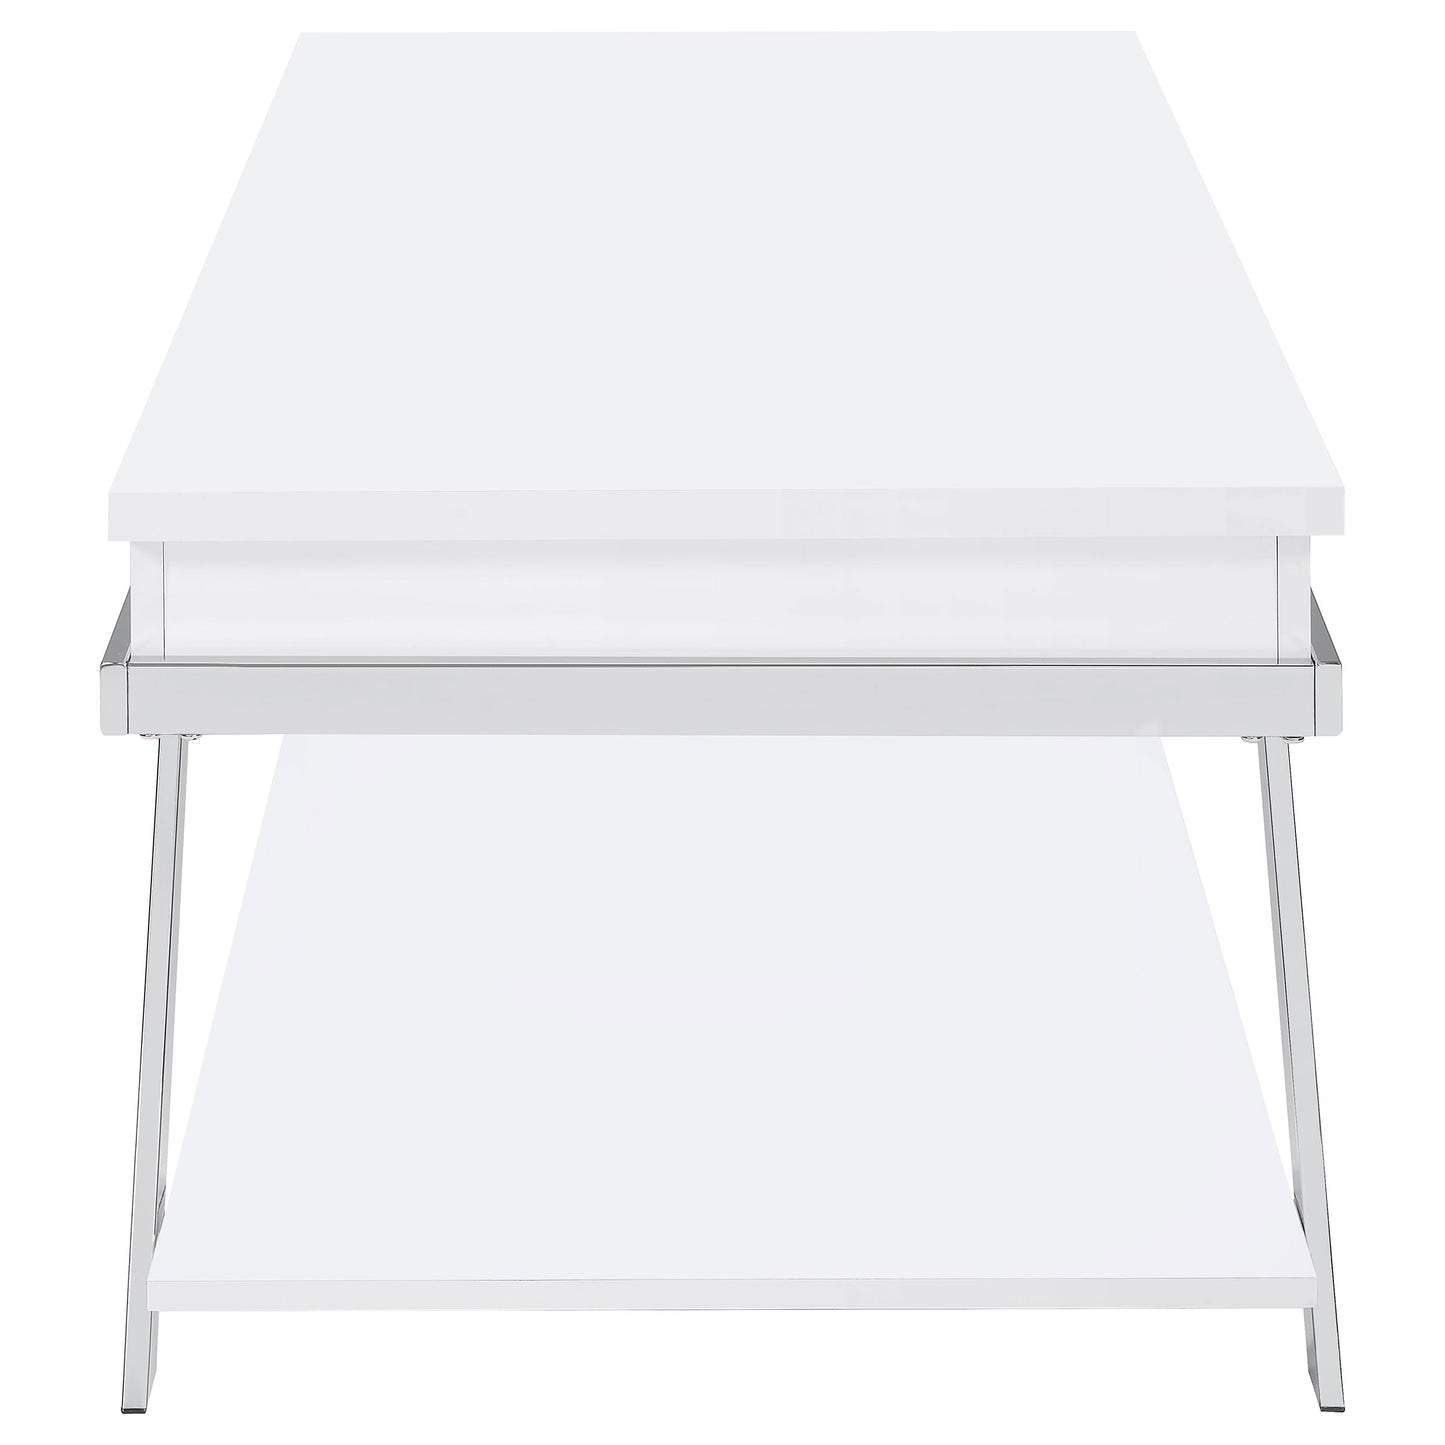 Marcia Wood Rectangular Lift Top Coffee Table White High Gloss and Chrome